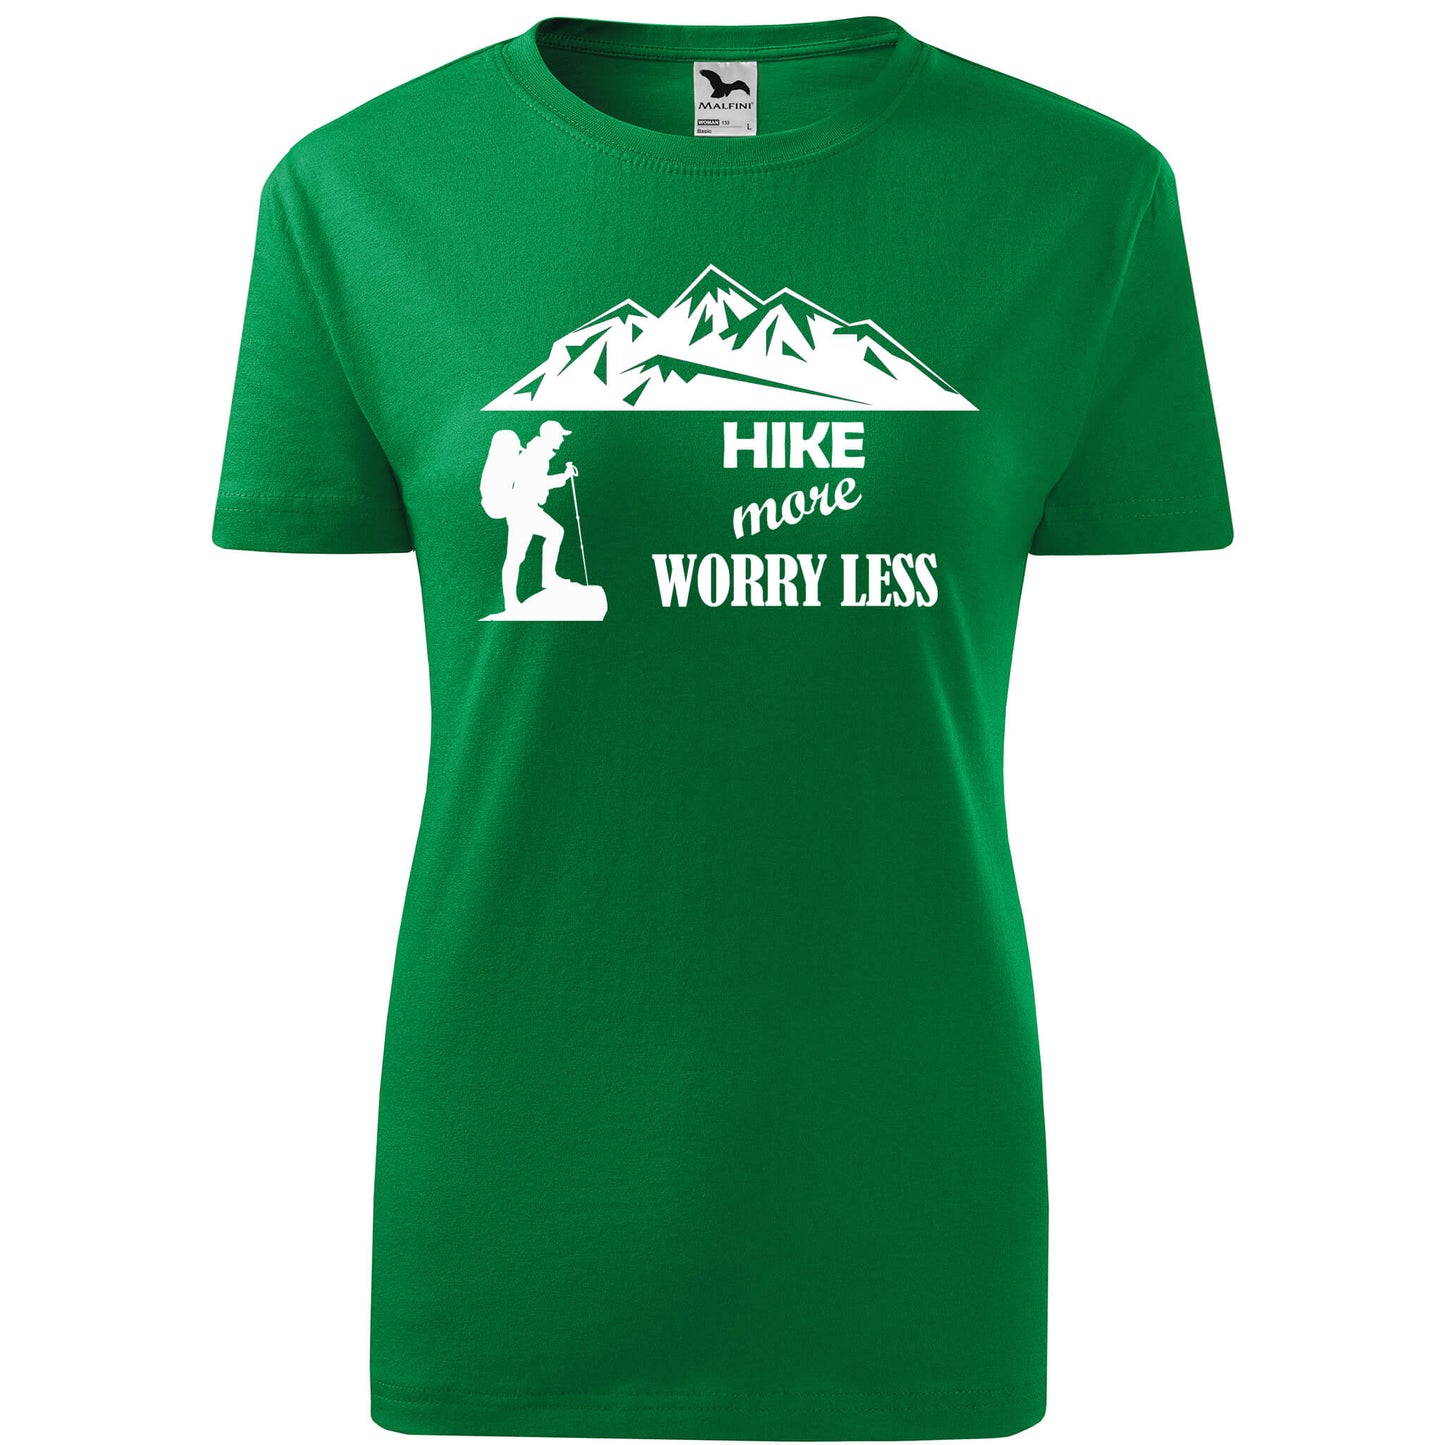 T-shirt - Hike more worry less - rvdesignprint